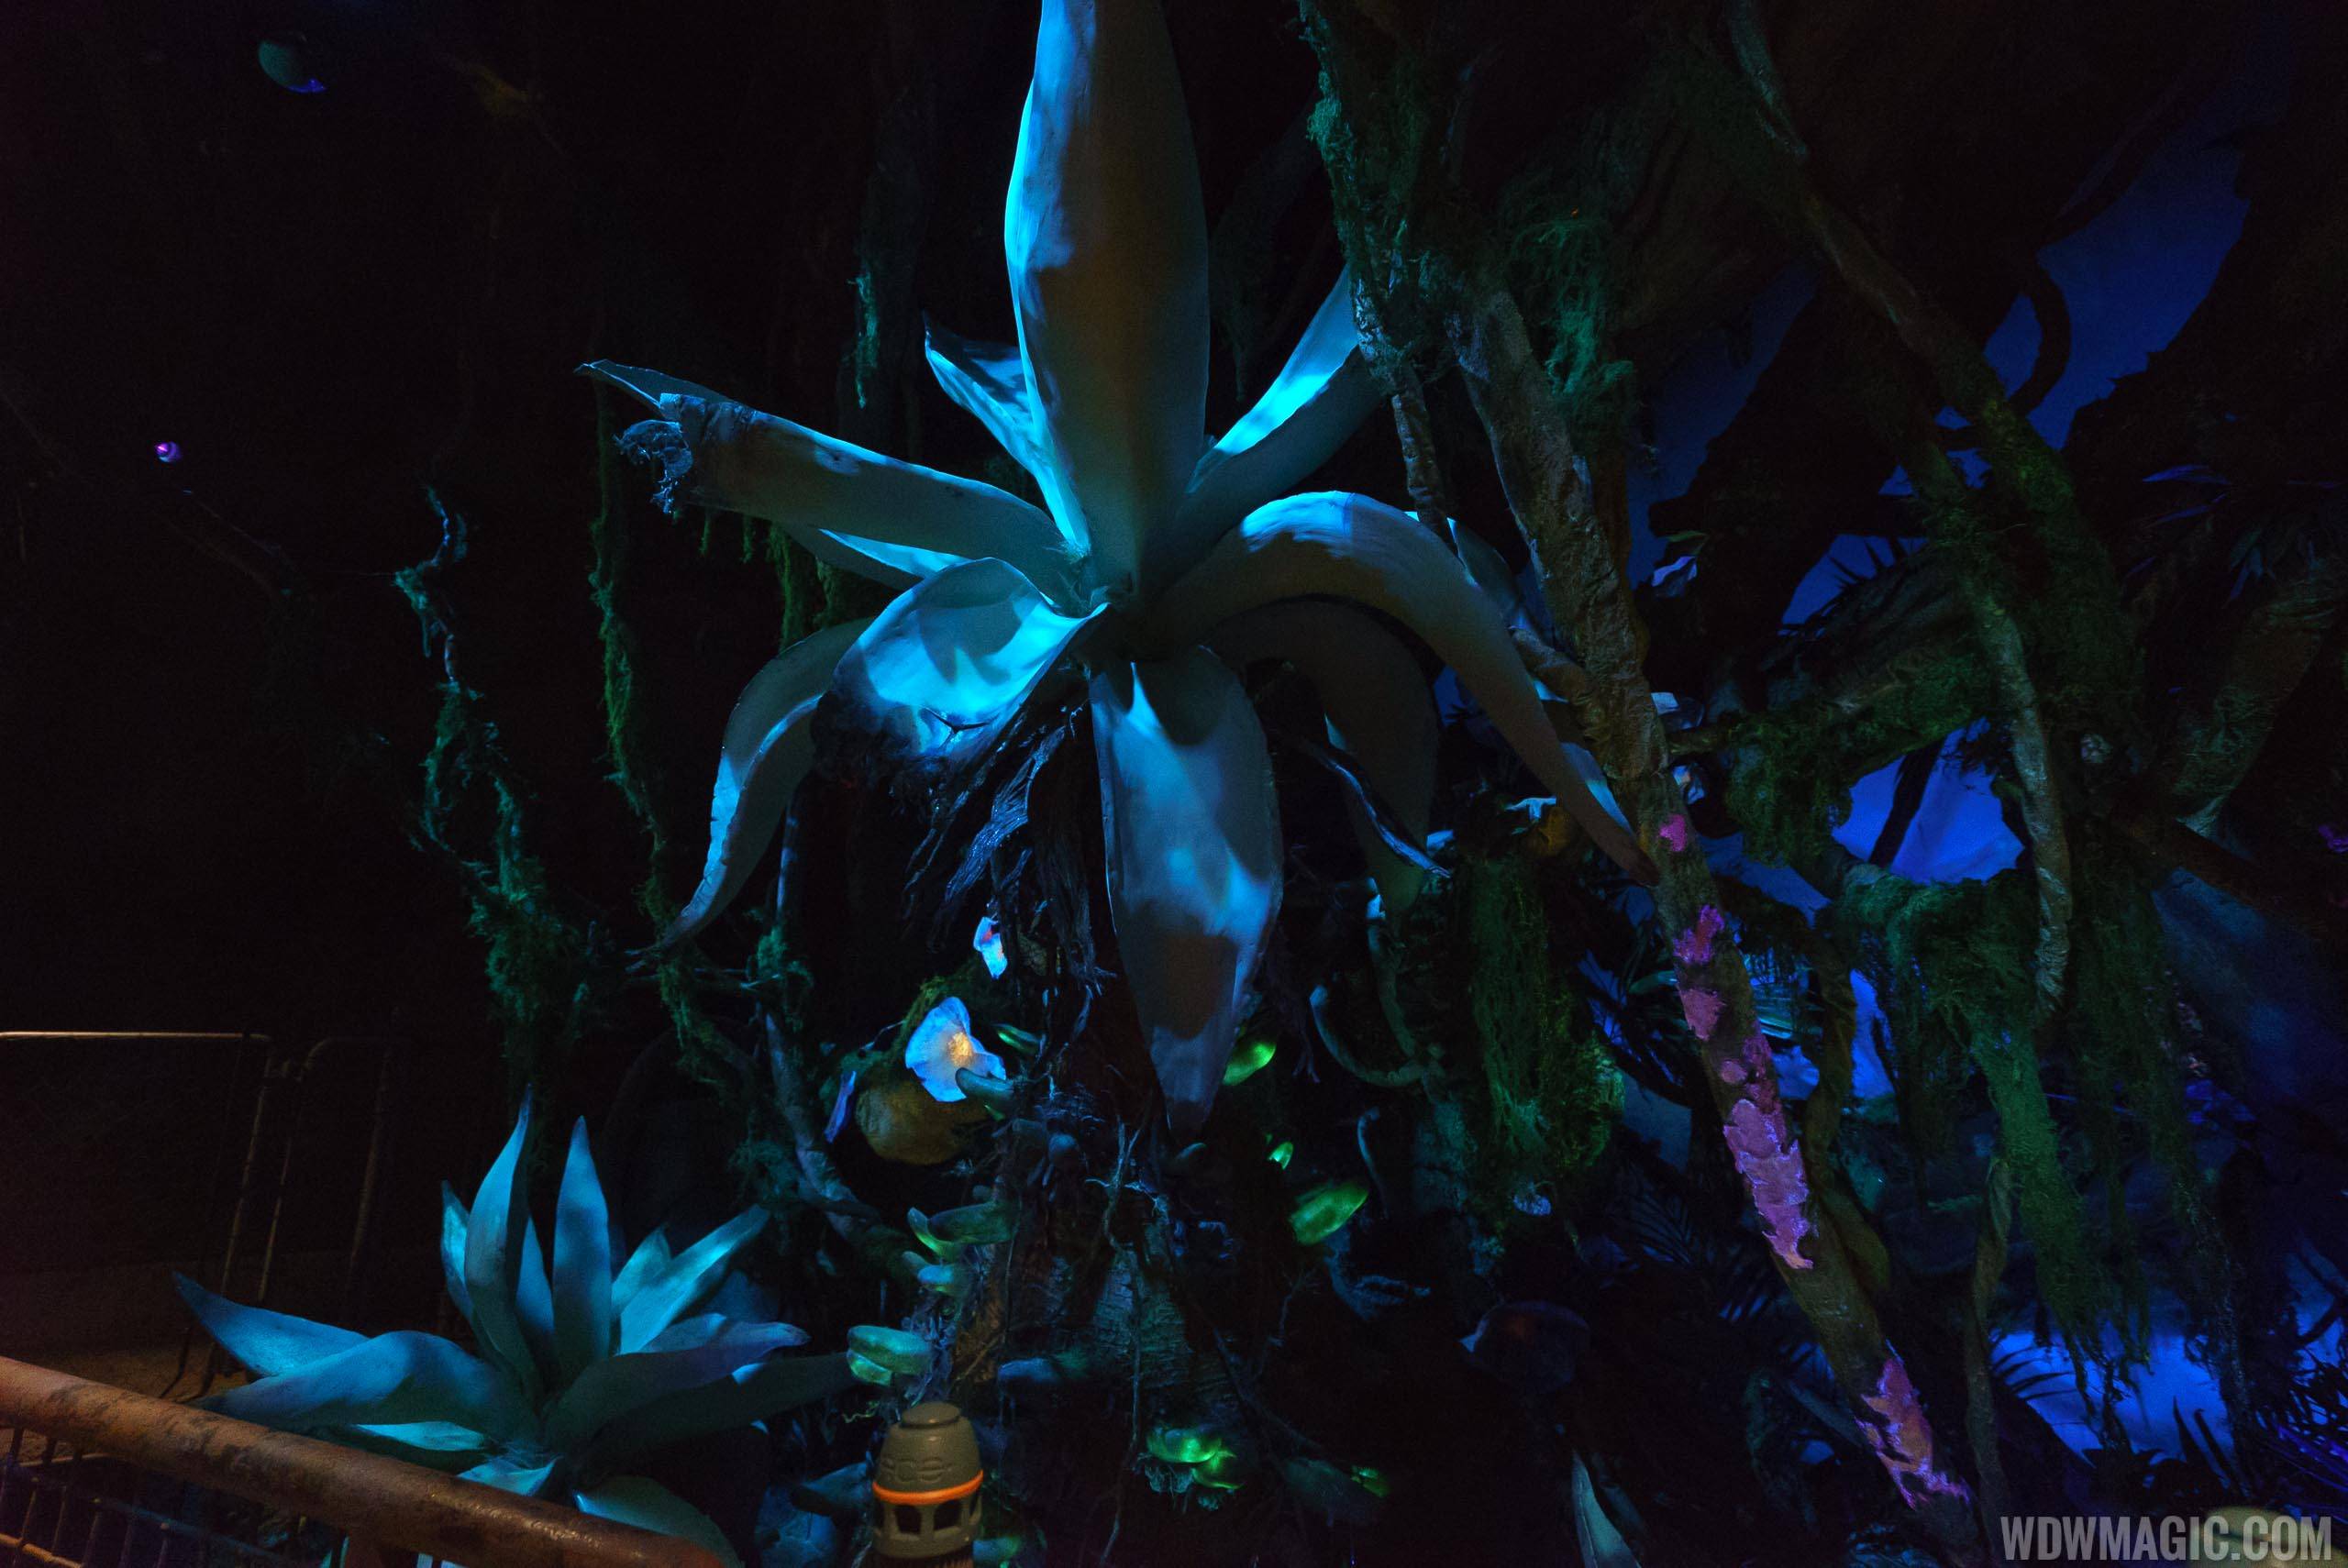 Avatar Flight of Passage queue - Bioluminescence plants